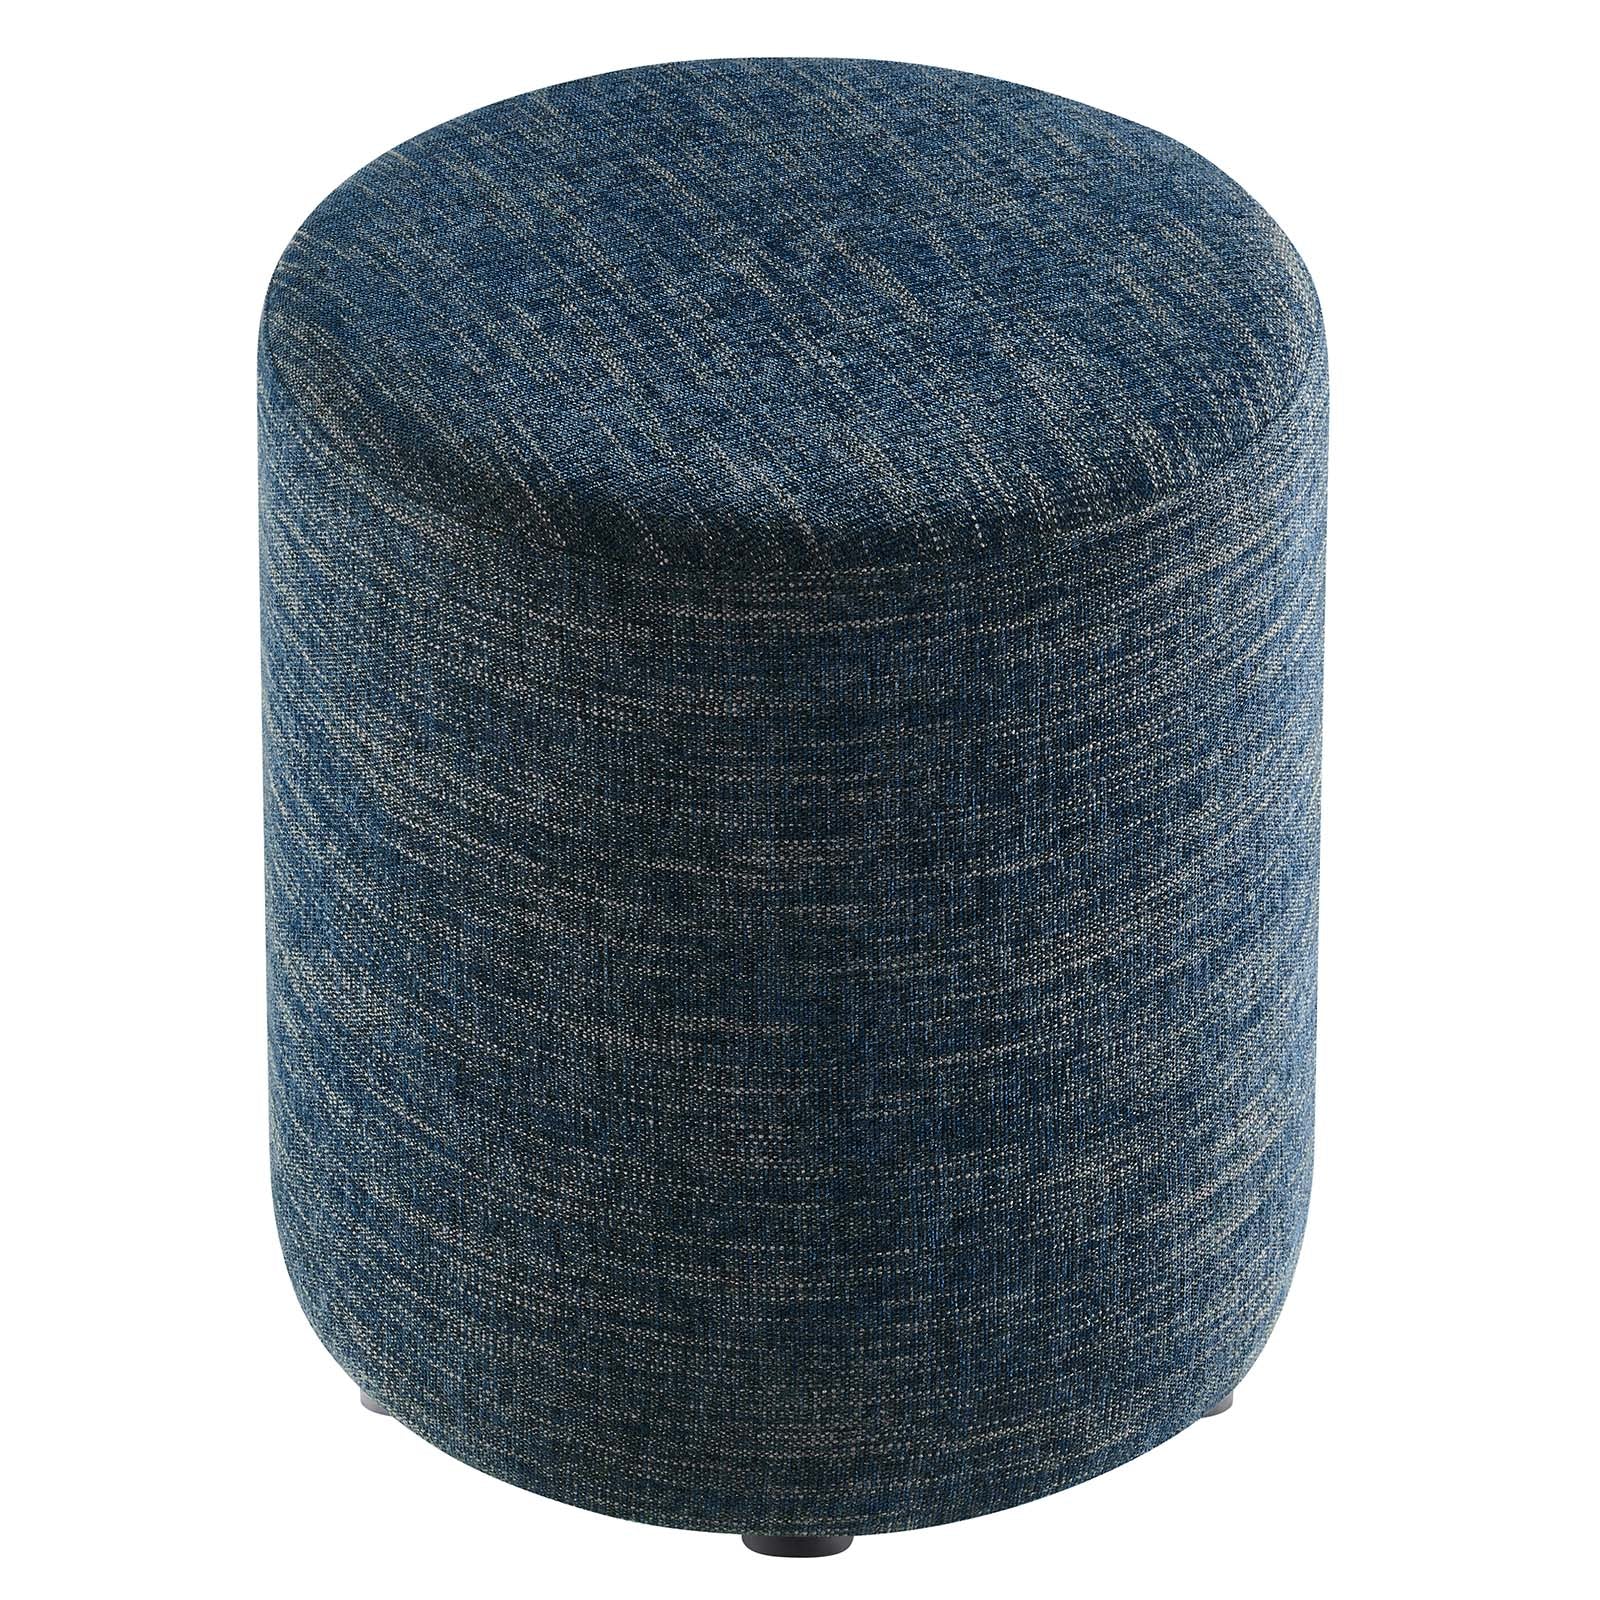 Callum 16" Round Woven Heathered Fabric Upholstered Ottoman